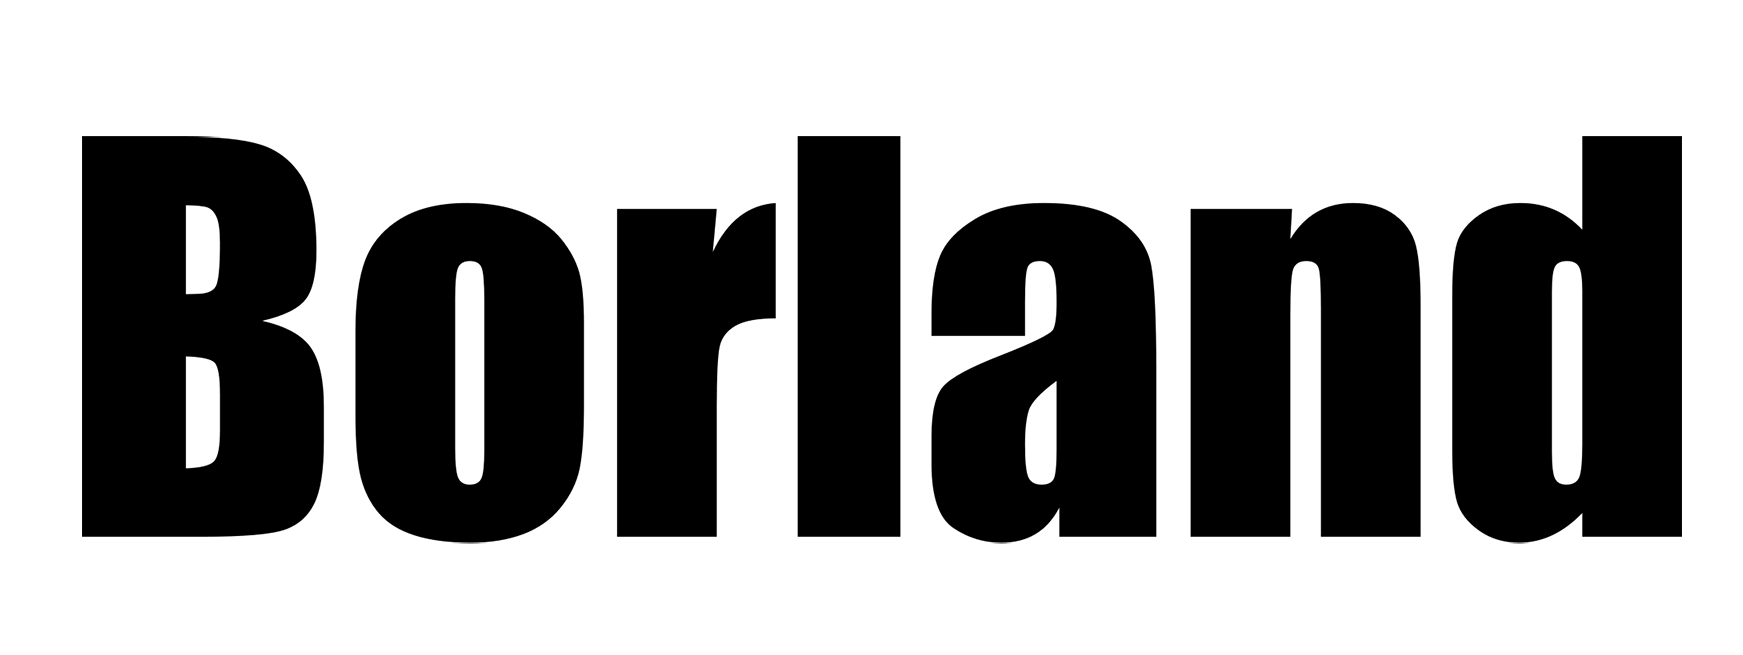 borland logo